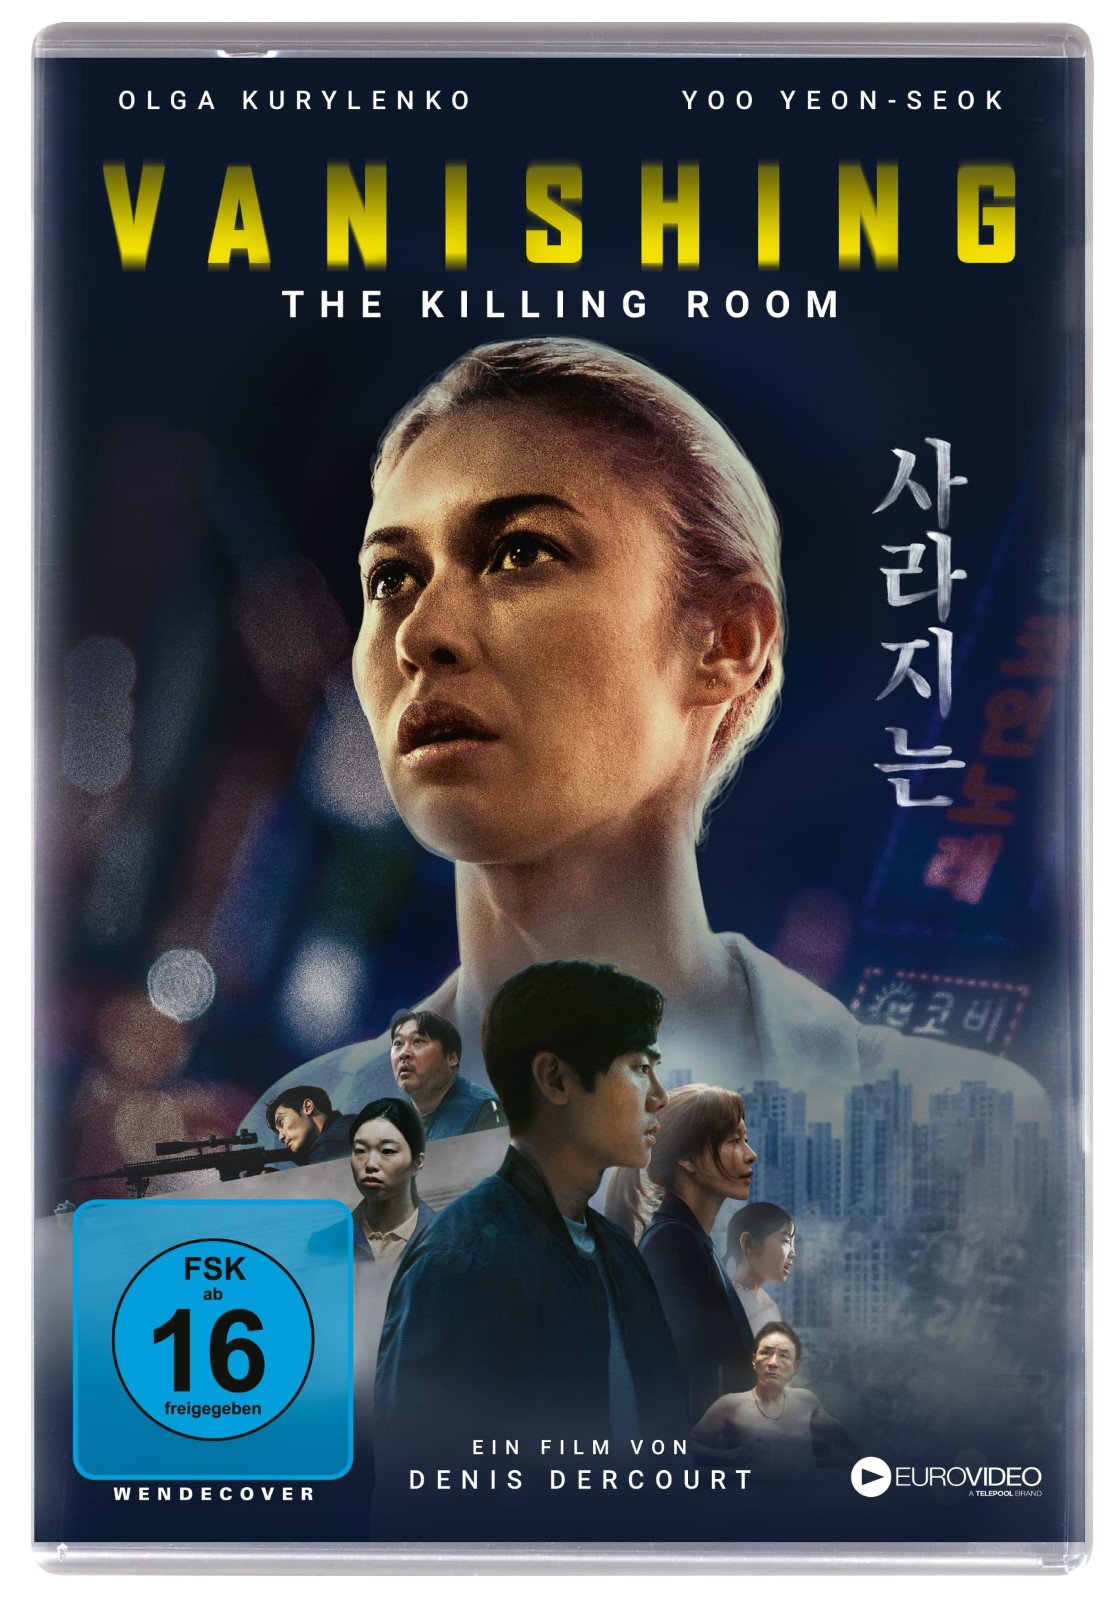 VANISHING – THE KILLING ROOM mit Bond-Girl Olga Kurylenko – Ab 29. November 2022 als DVD und Blu-ray erhältlich!